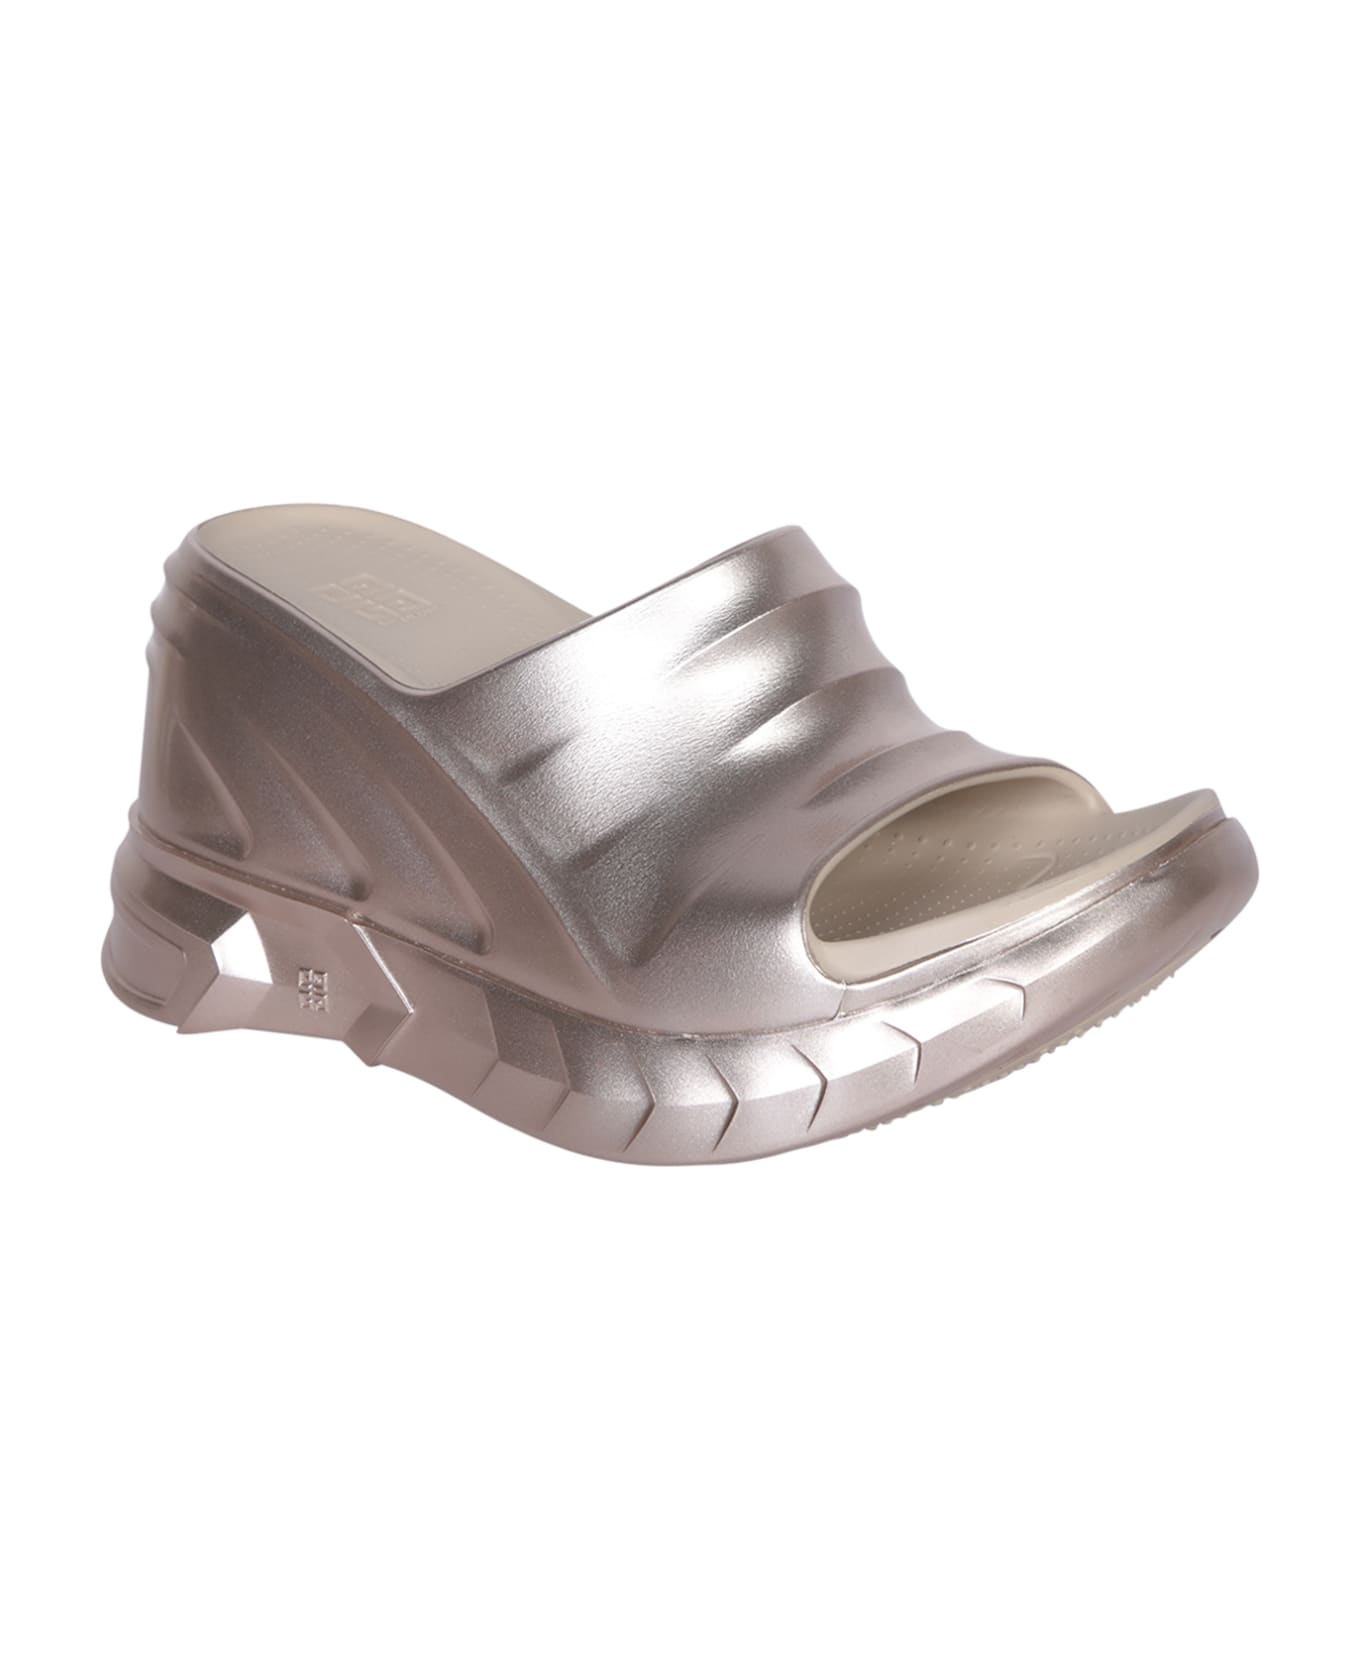 Givenchy Marshmallow Wedge Sandals - Metallic